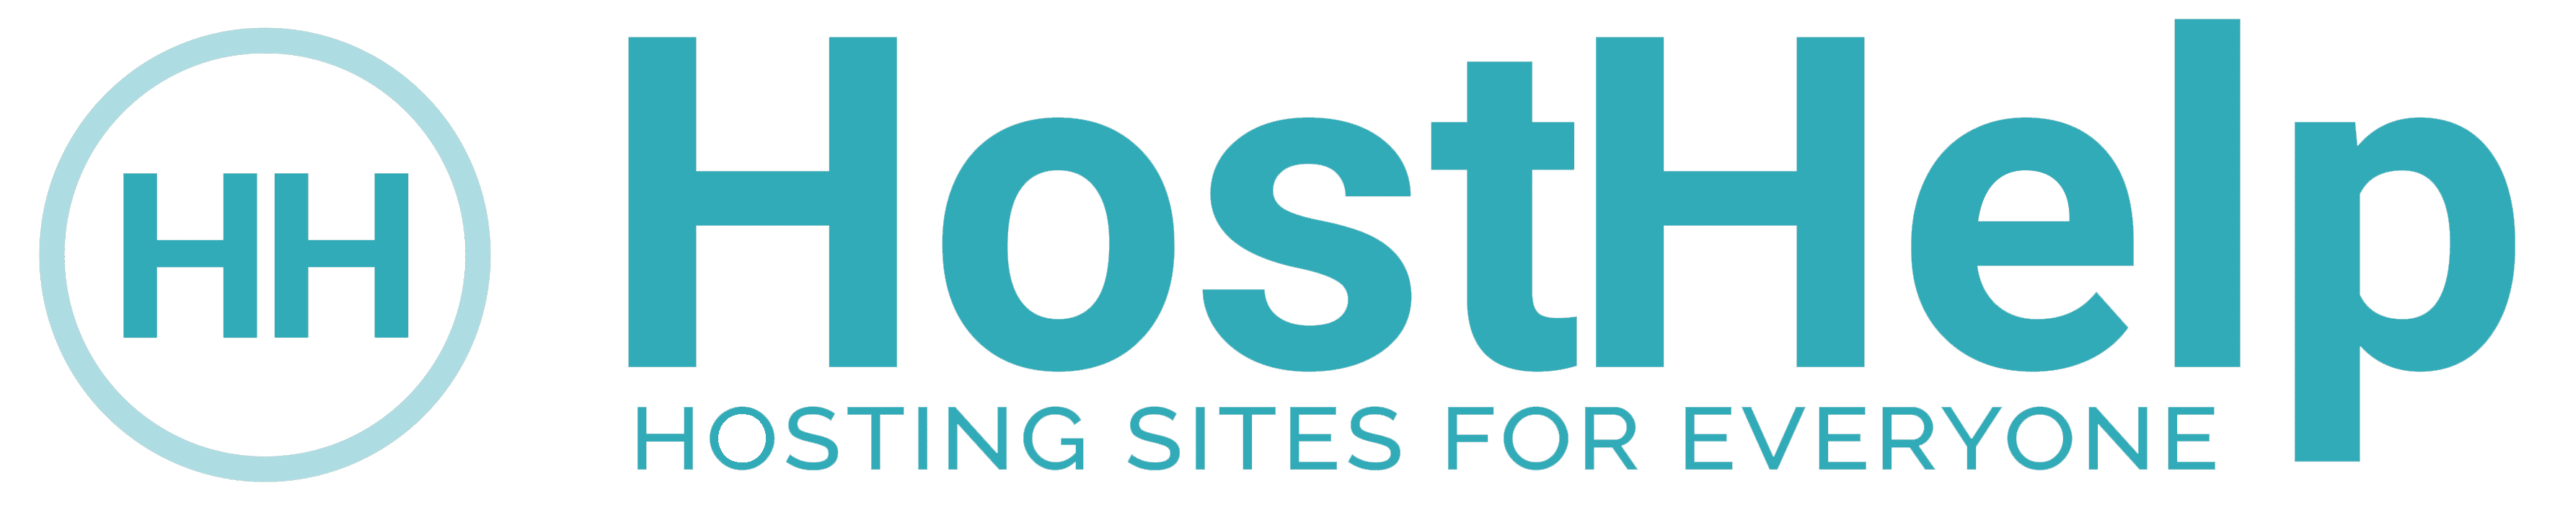 host help logo